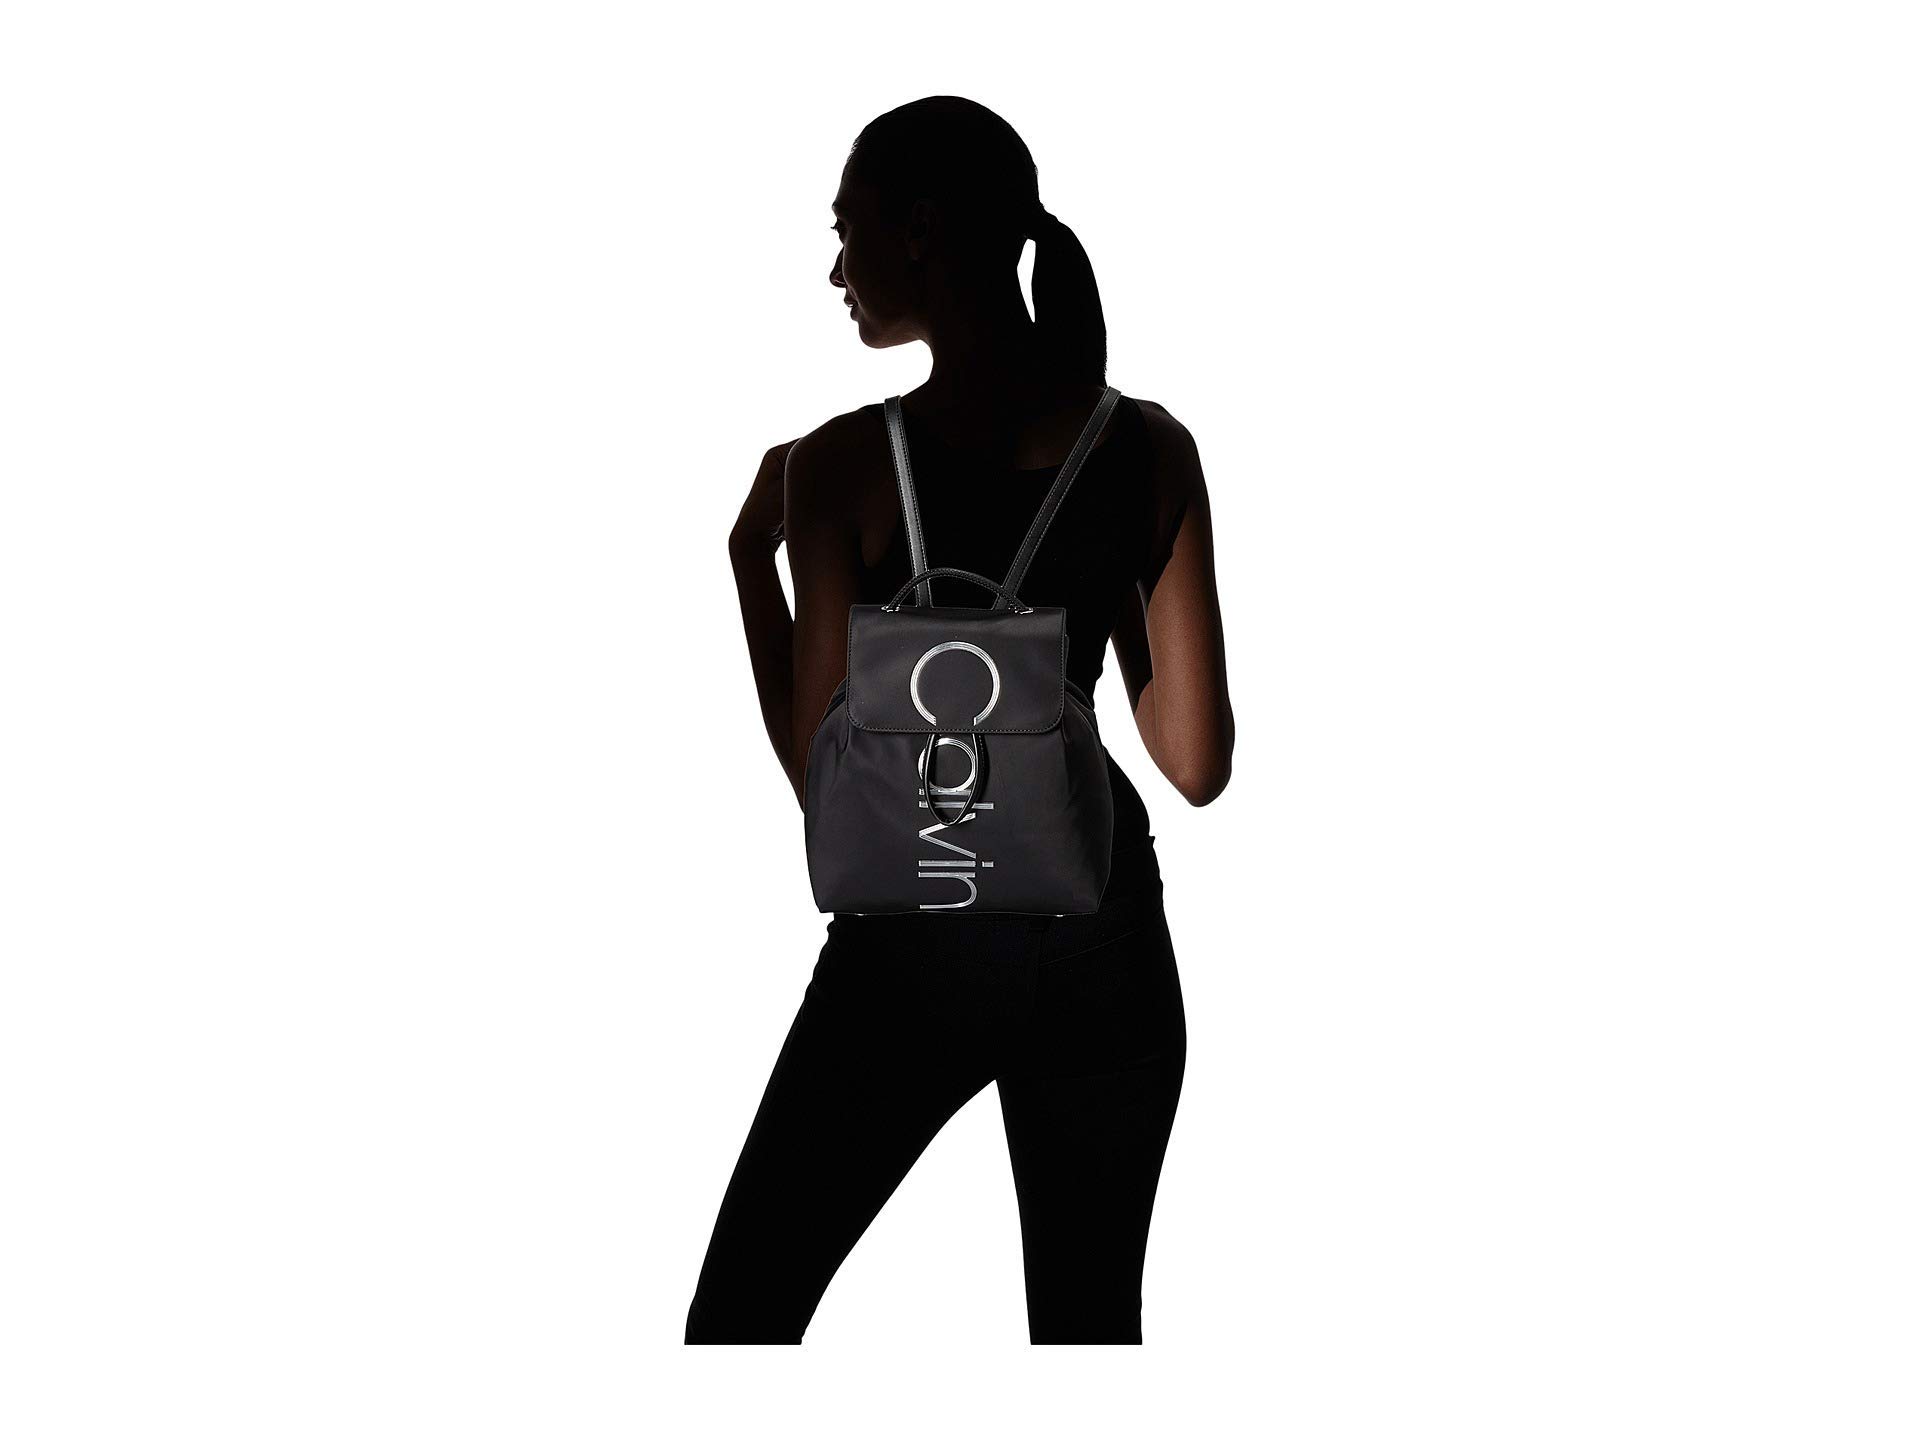 Calvin Klein Mallory Nylon Backpack Black One Size